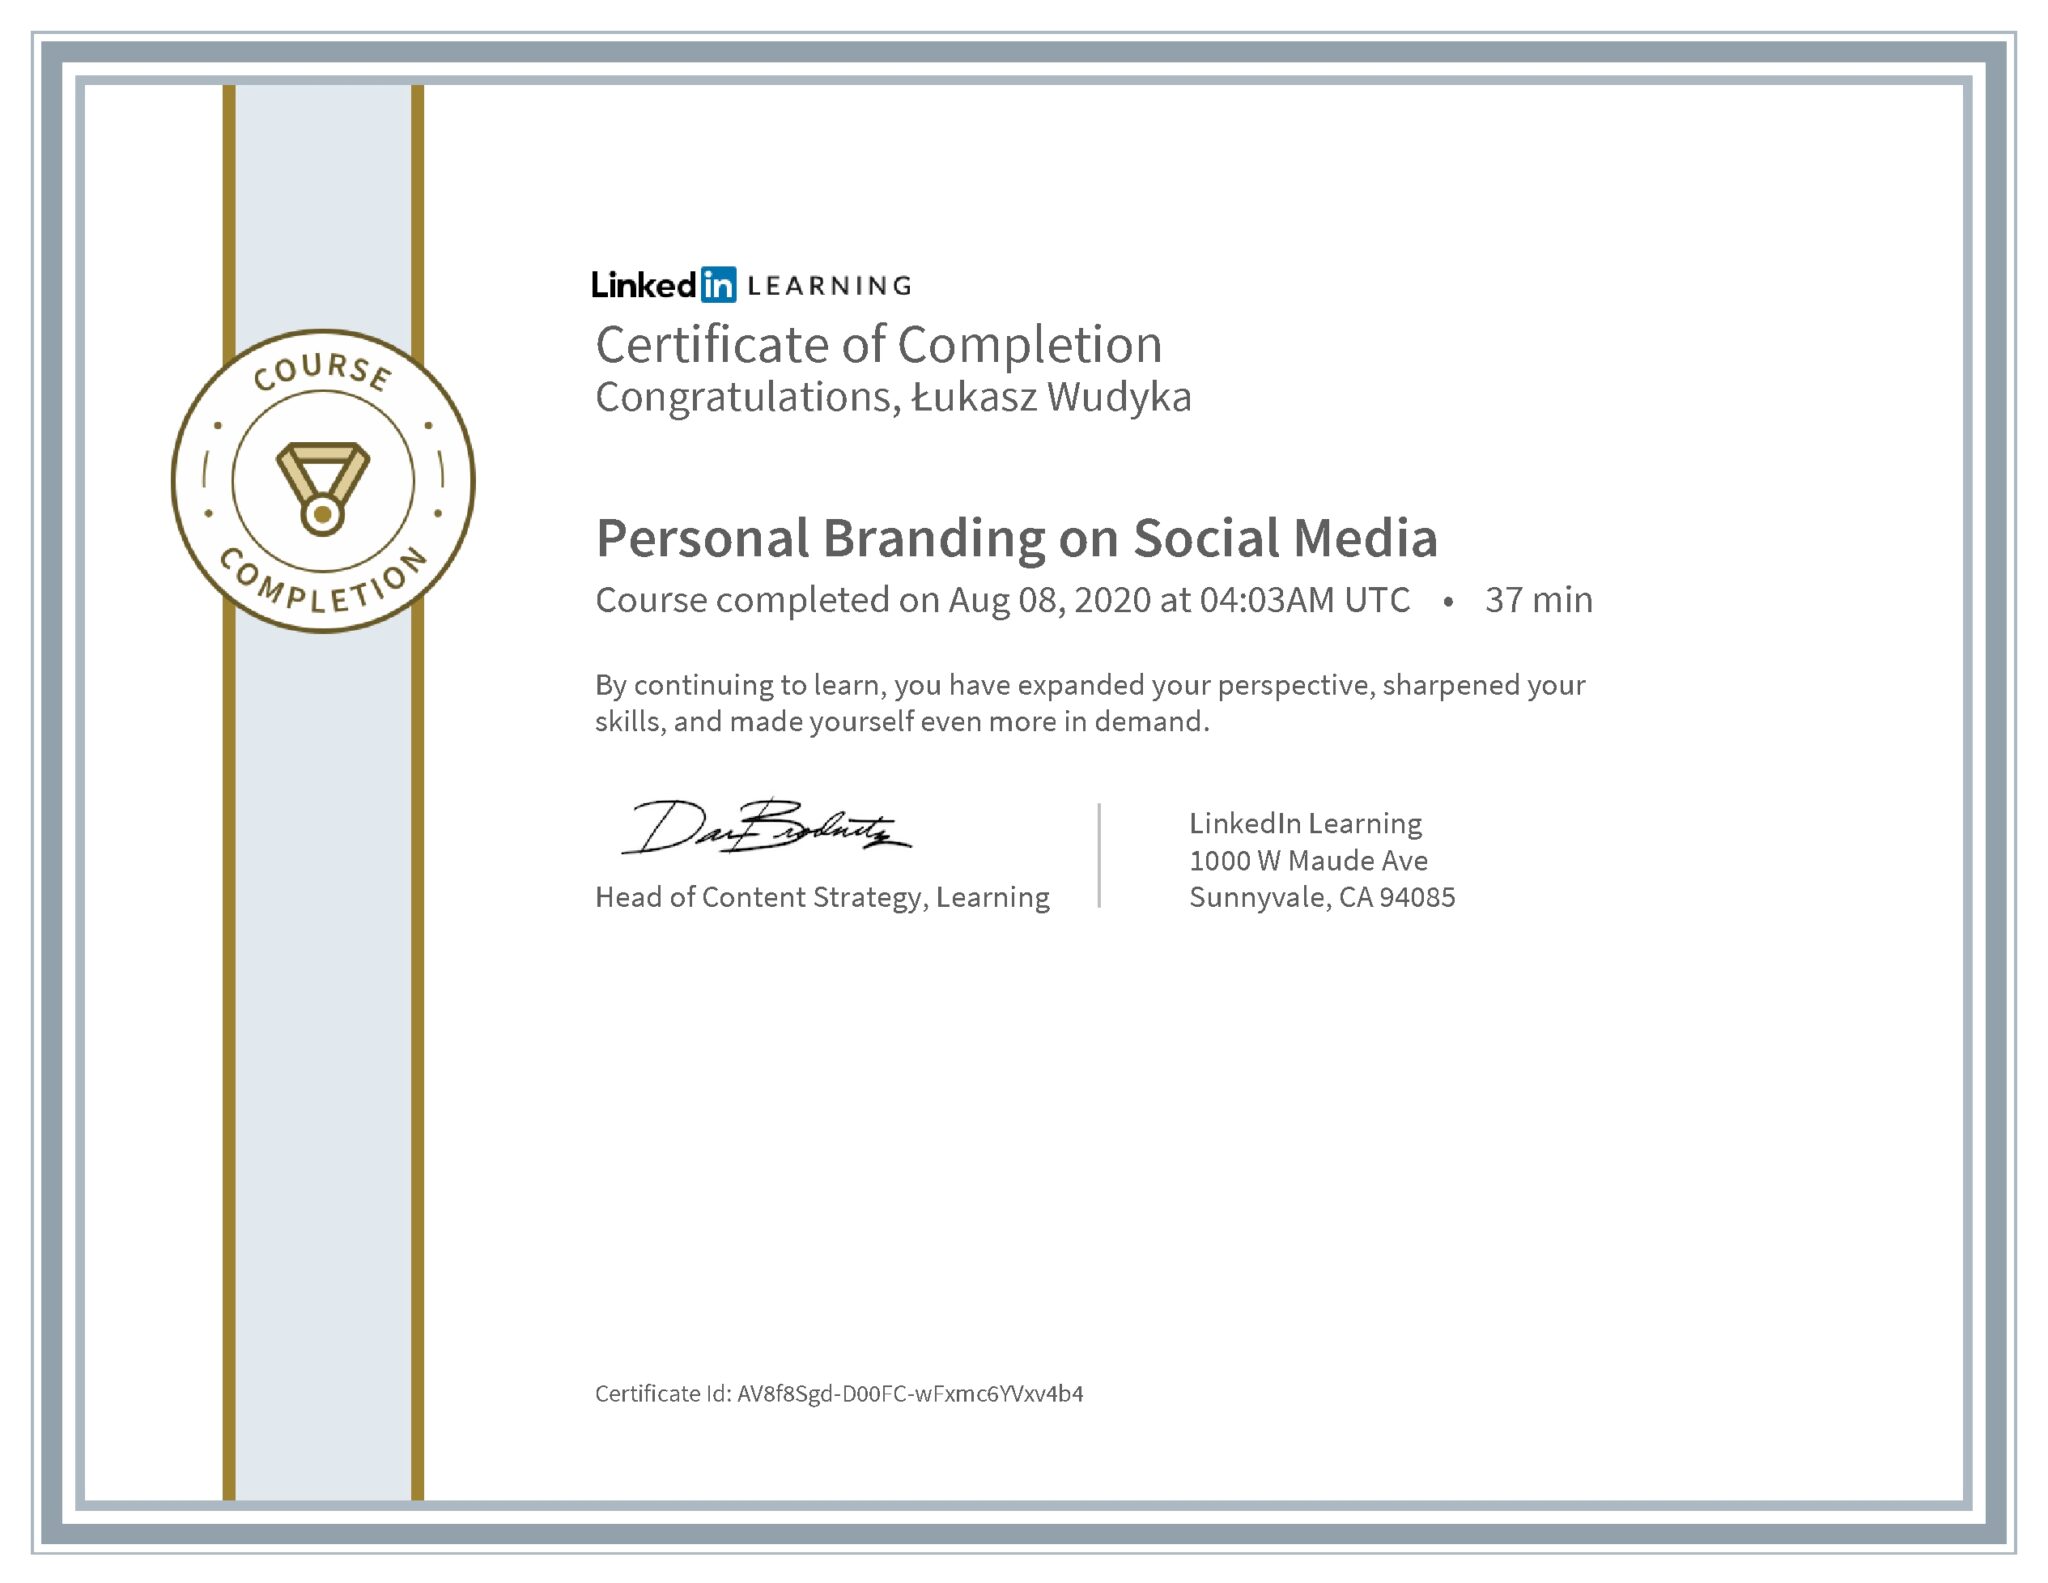 Łukasz Wudyka certyfikat LinkedIn Personal Branding on Social Media